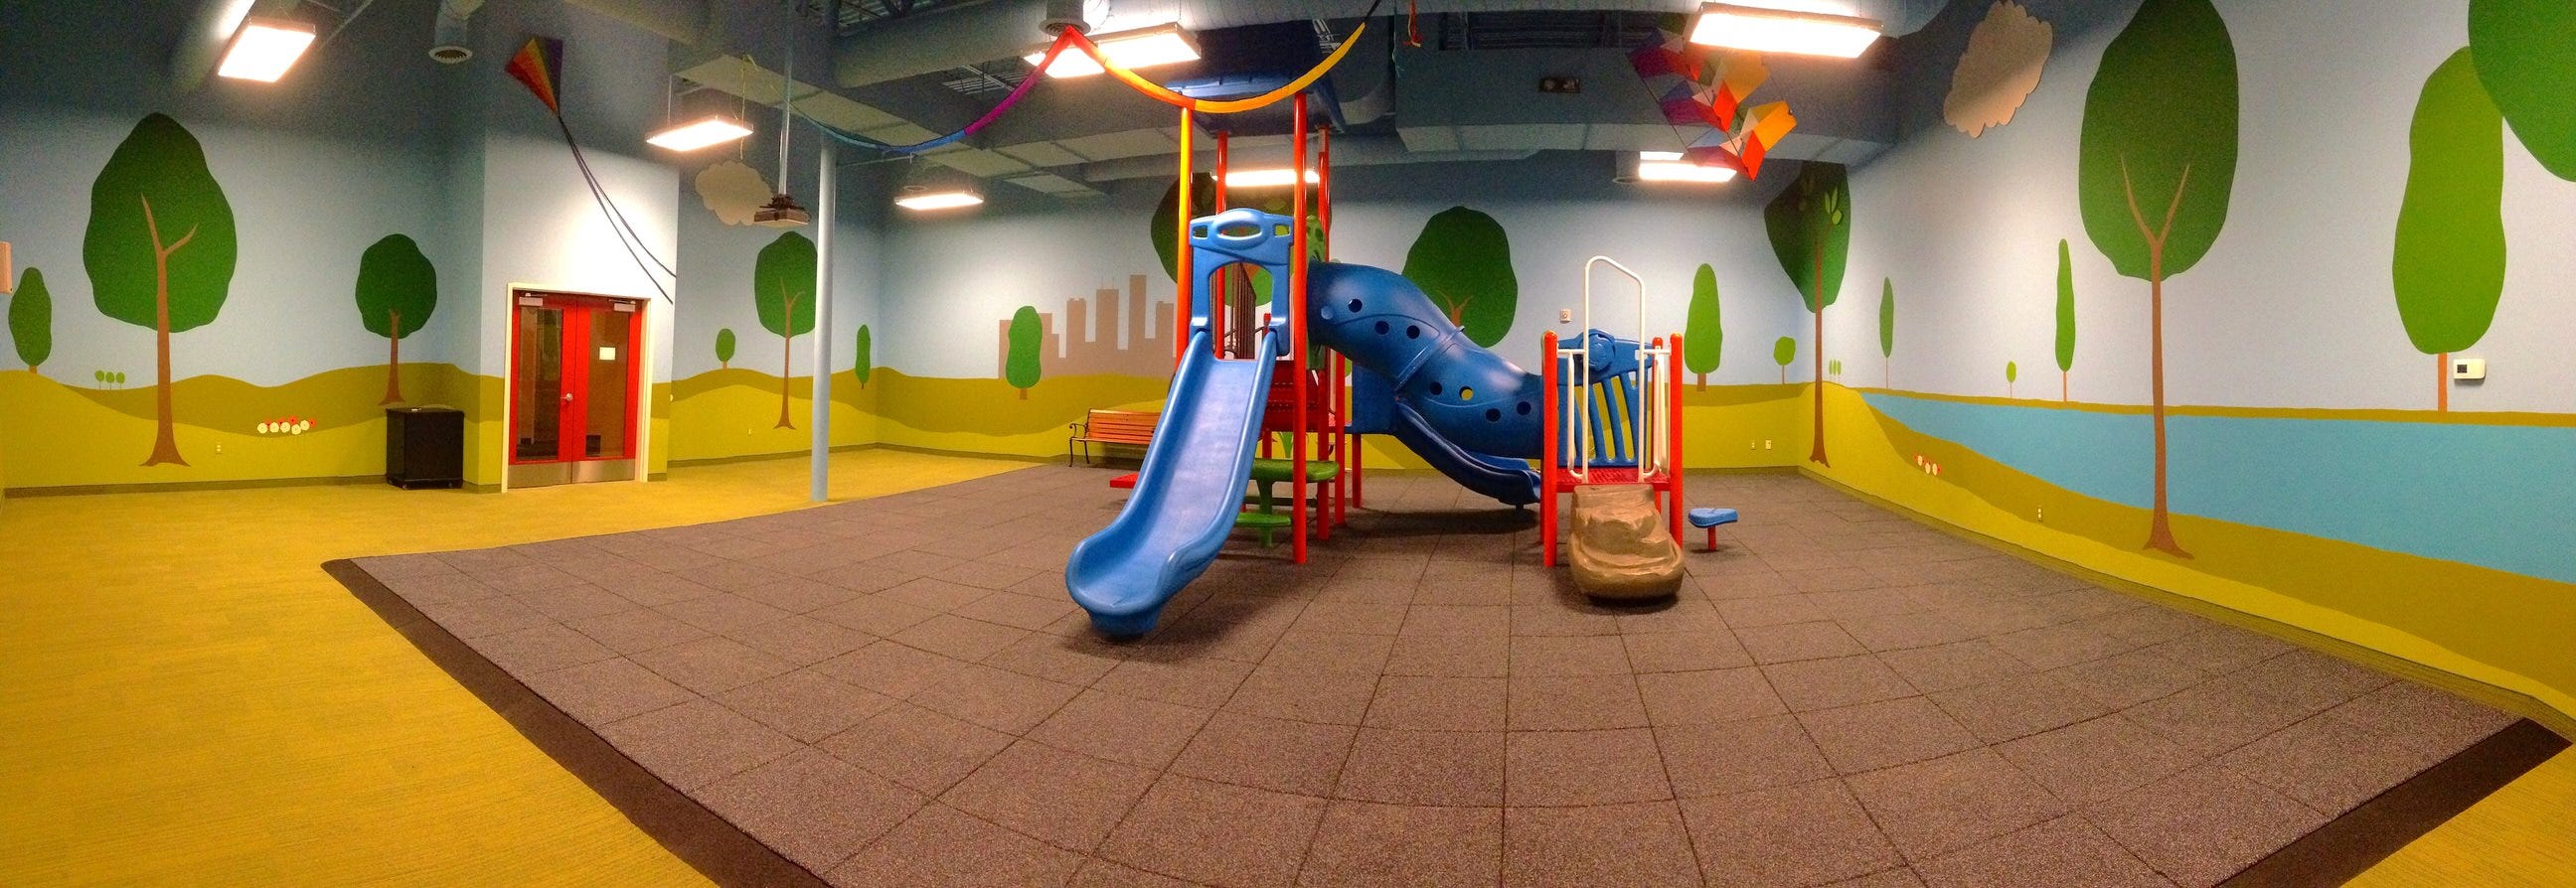 Engedi Church Indoor Playground - Holland, MI